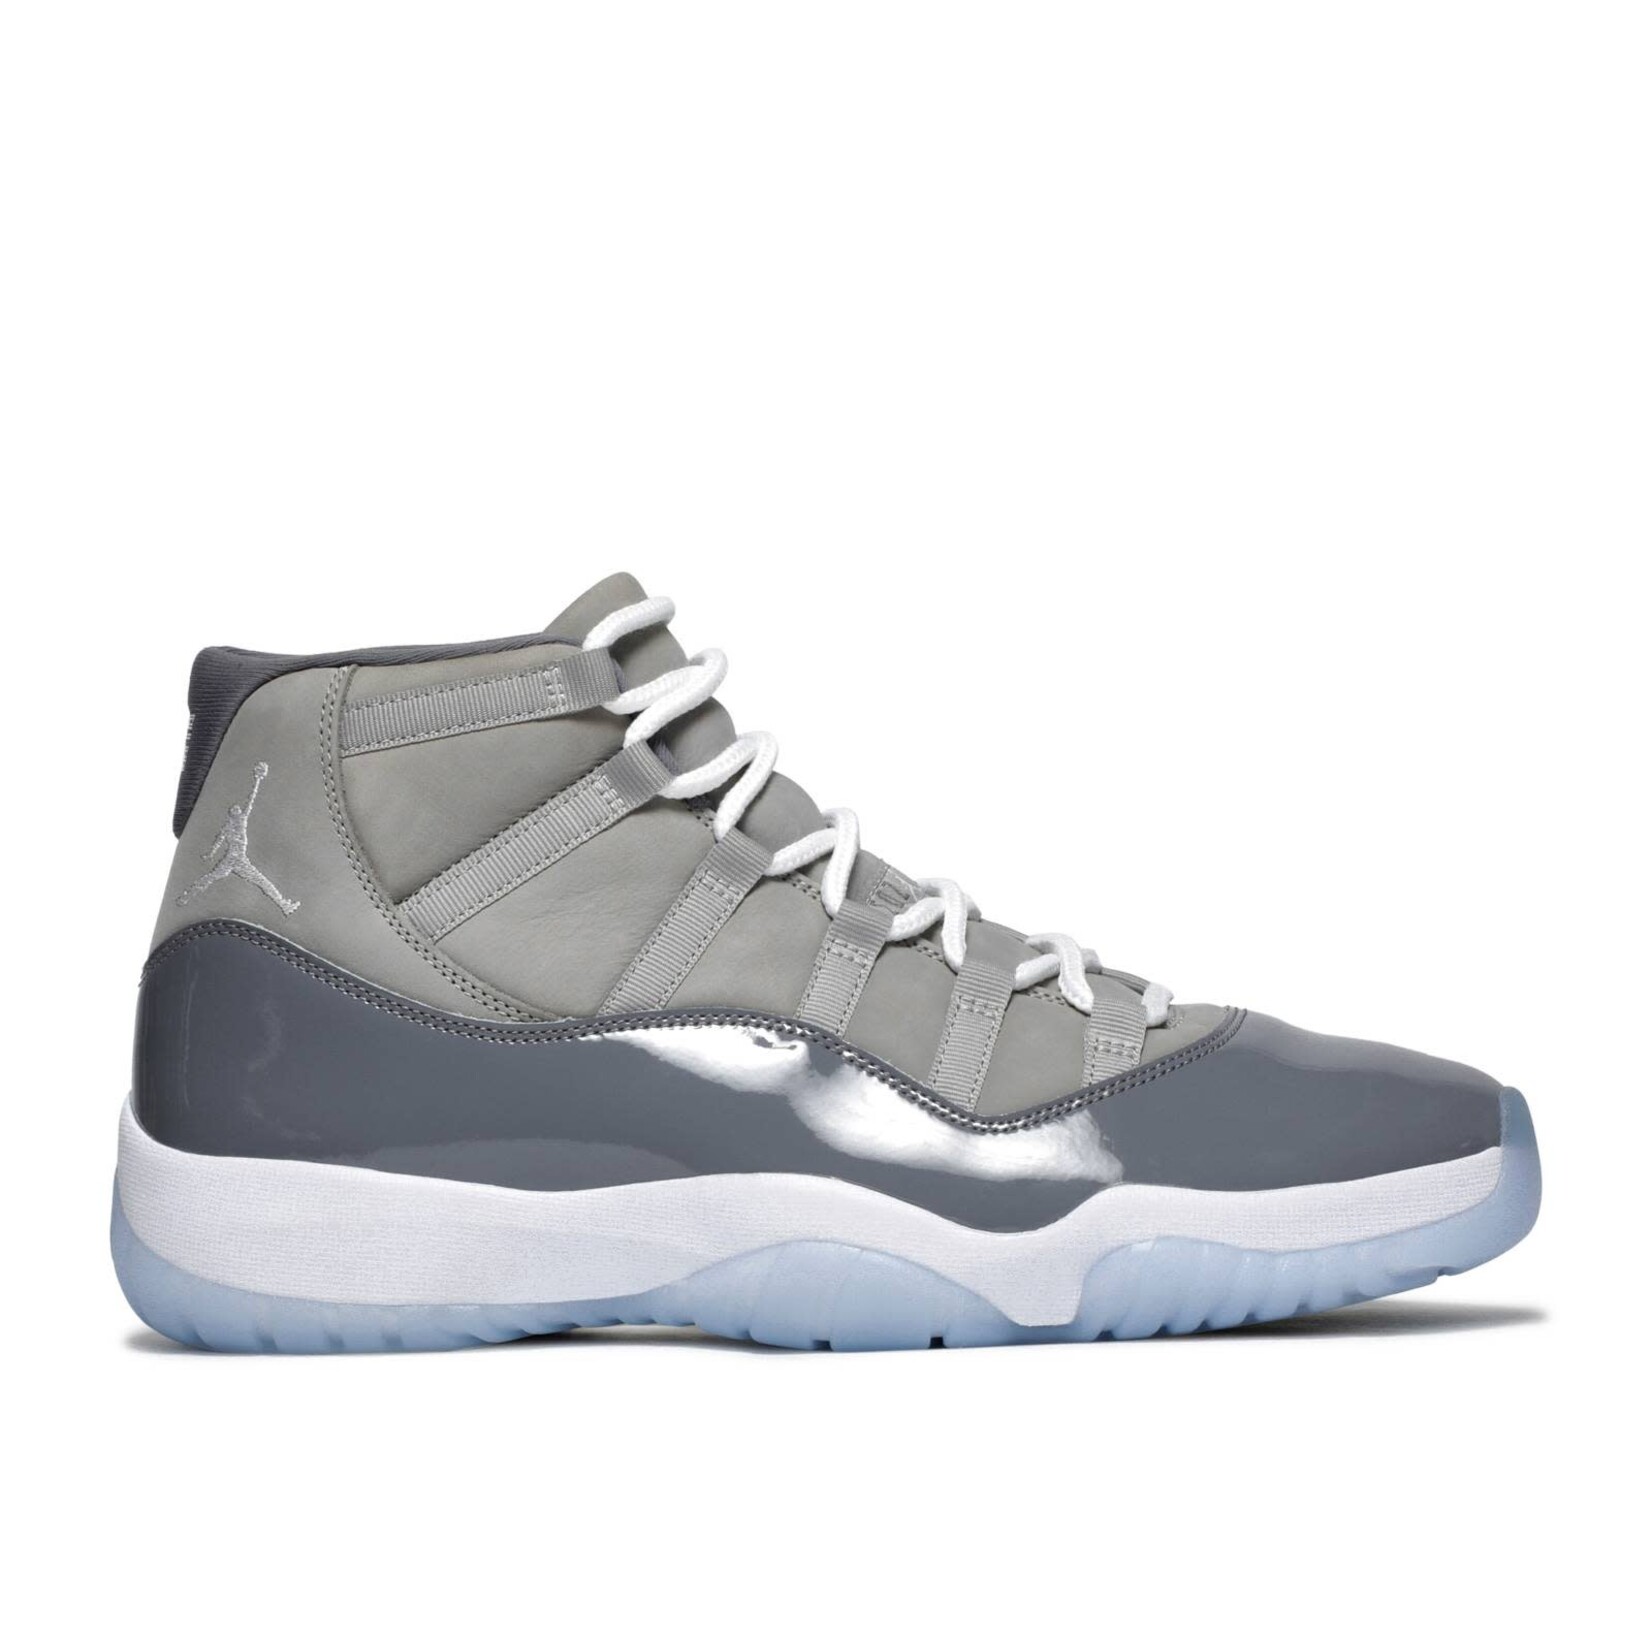 Jordan Jordan 11 Retro Cool Grey (2021) Size 10.5, DS BRAND NEW